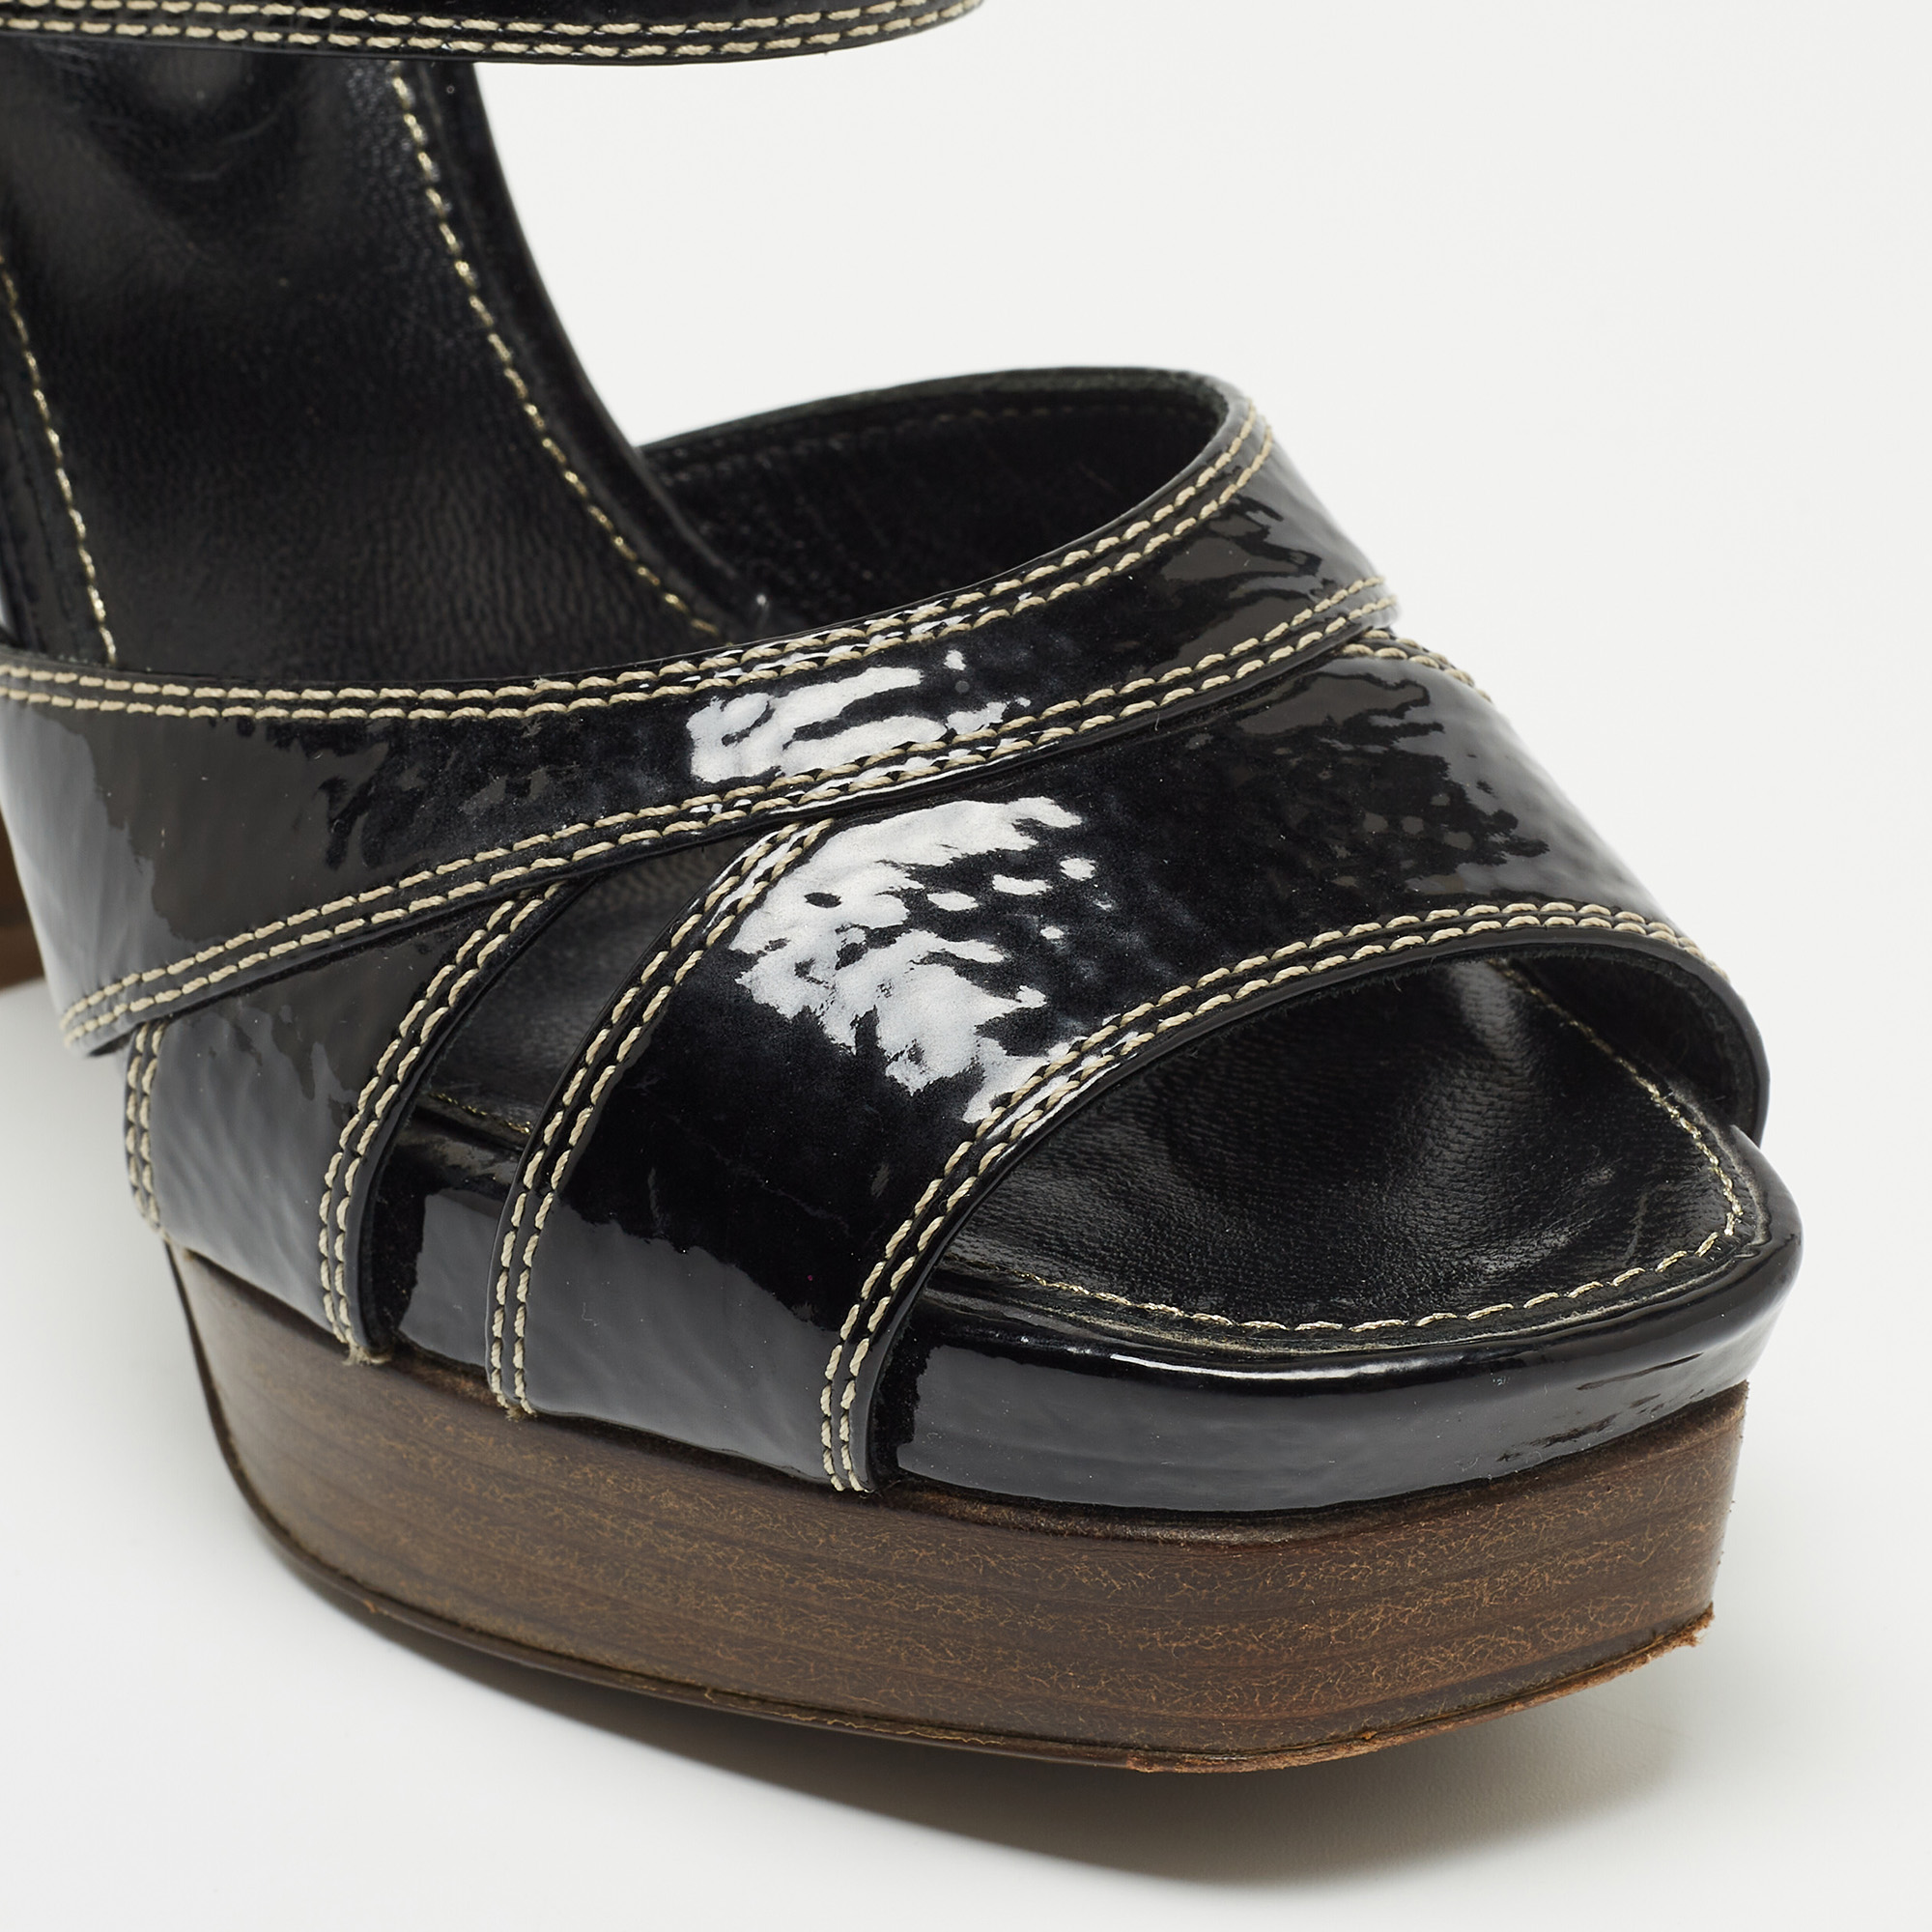 Sergio Rossi Black Patent Platform Ankle Strap Sandals Size 37.5